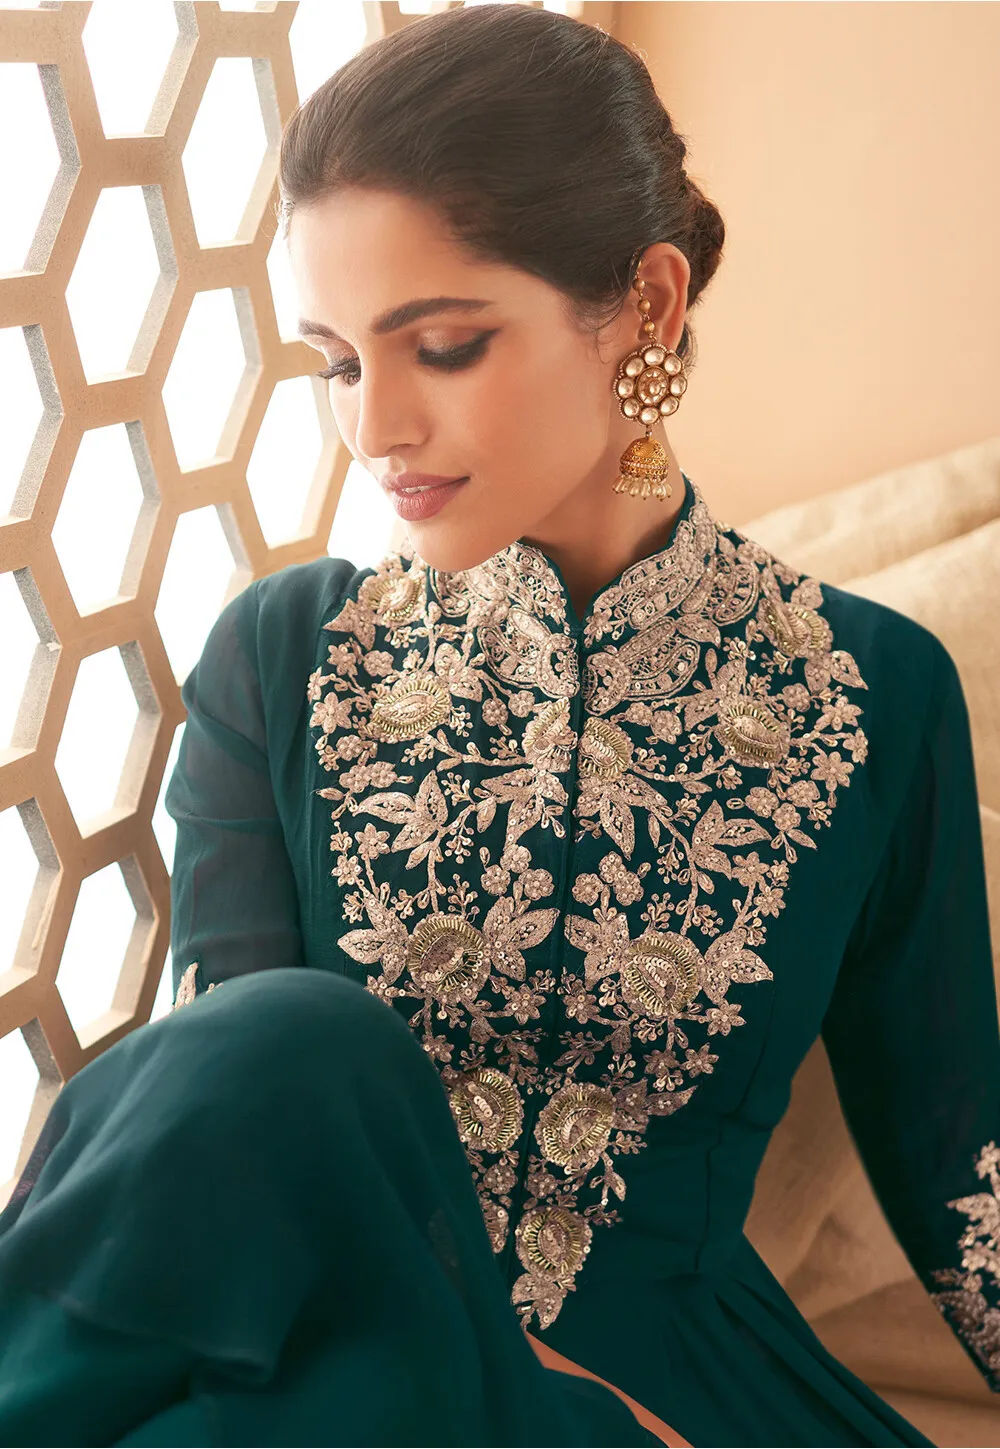 New Designer Pakistani Style Brown Color Salwar Suit